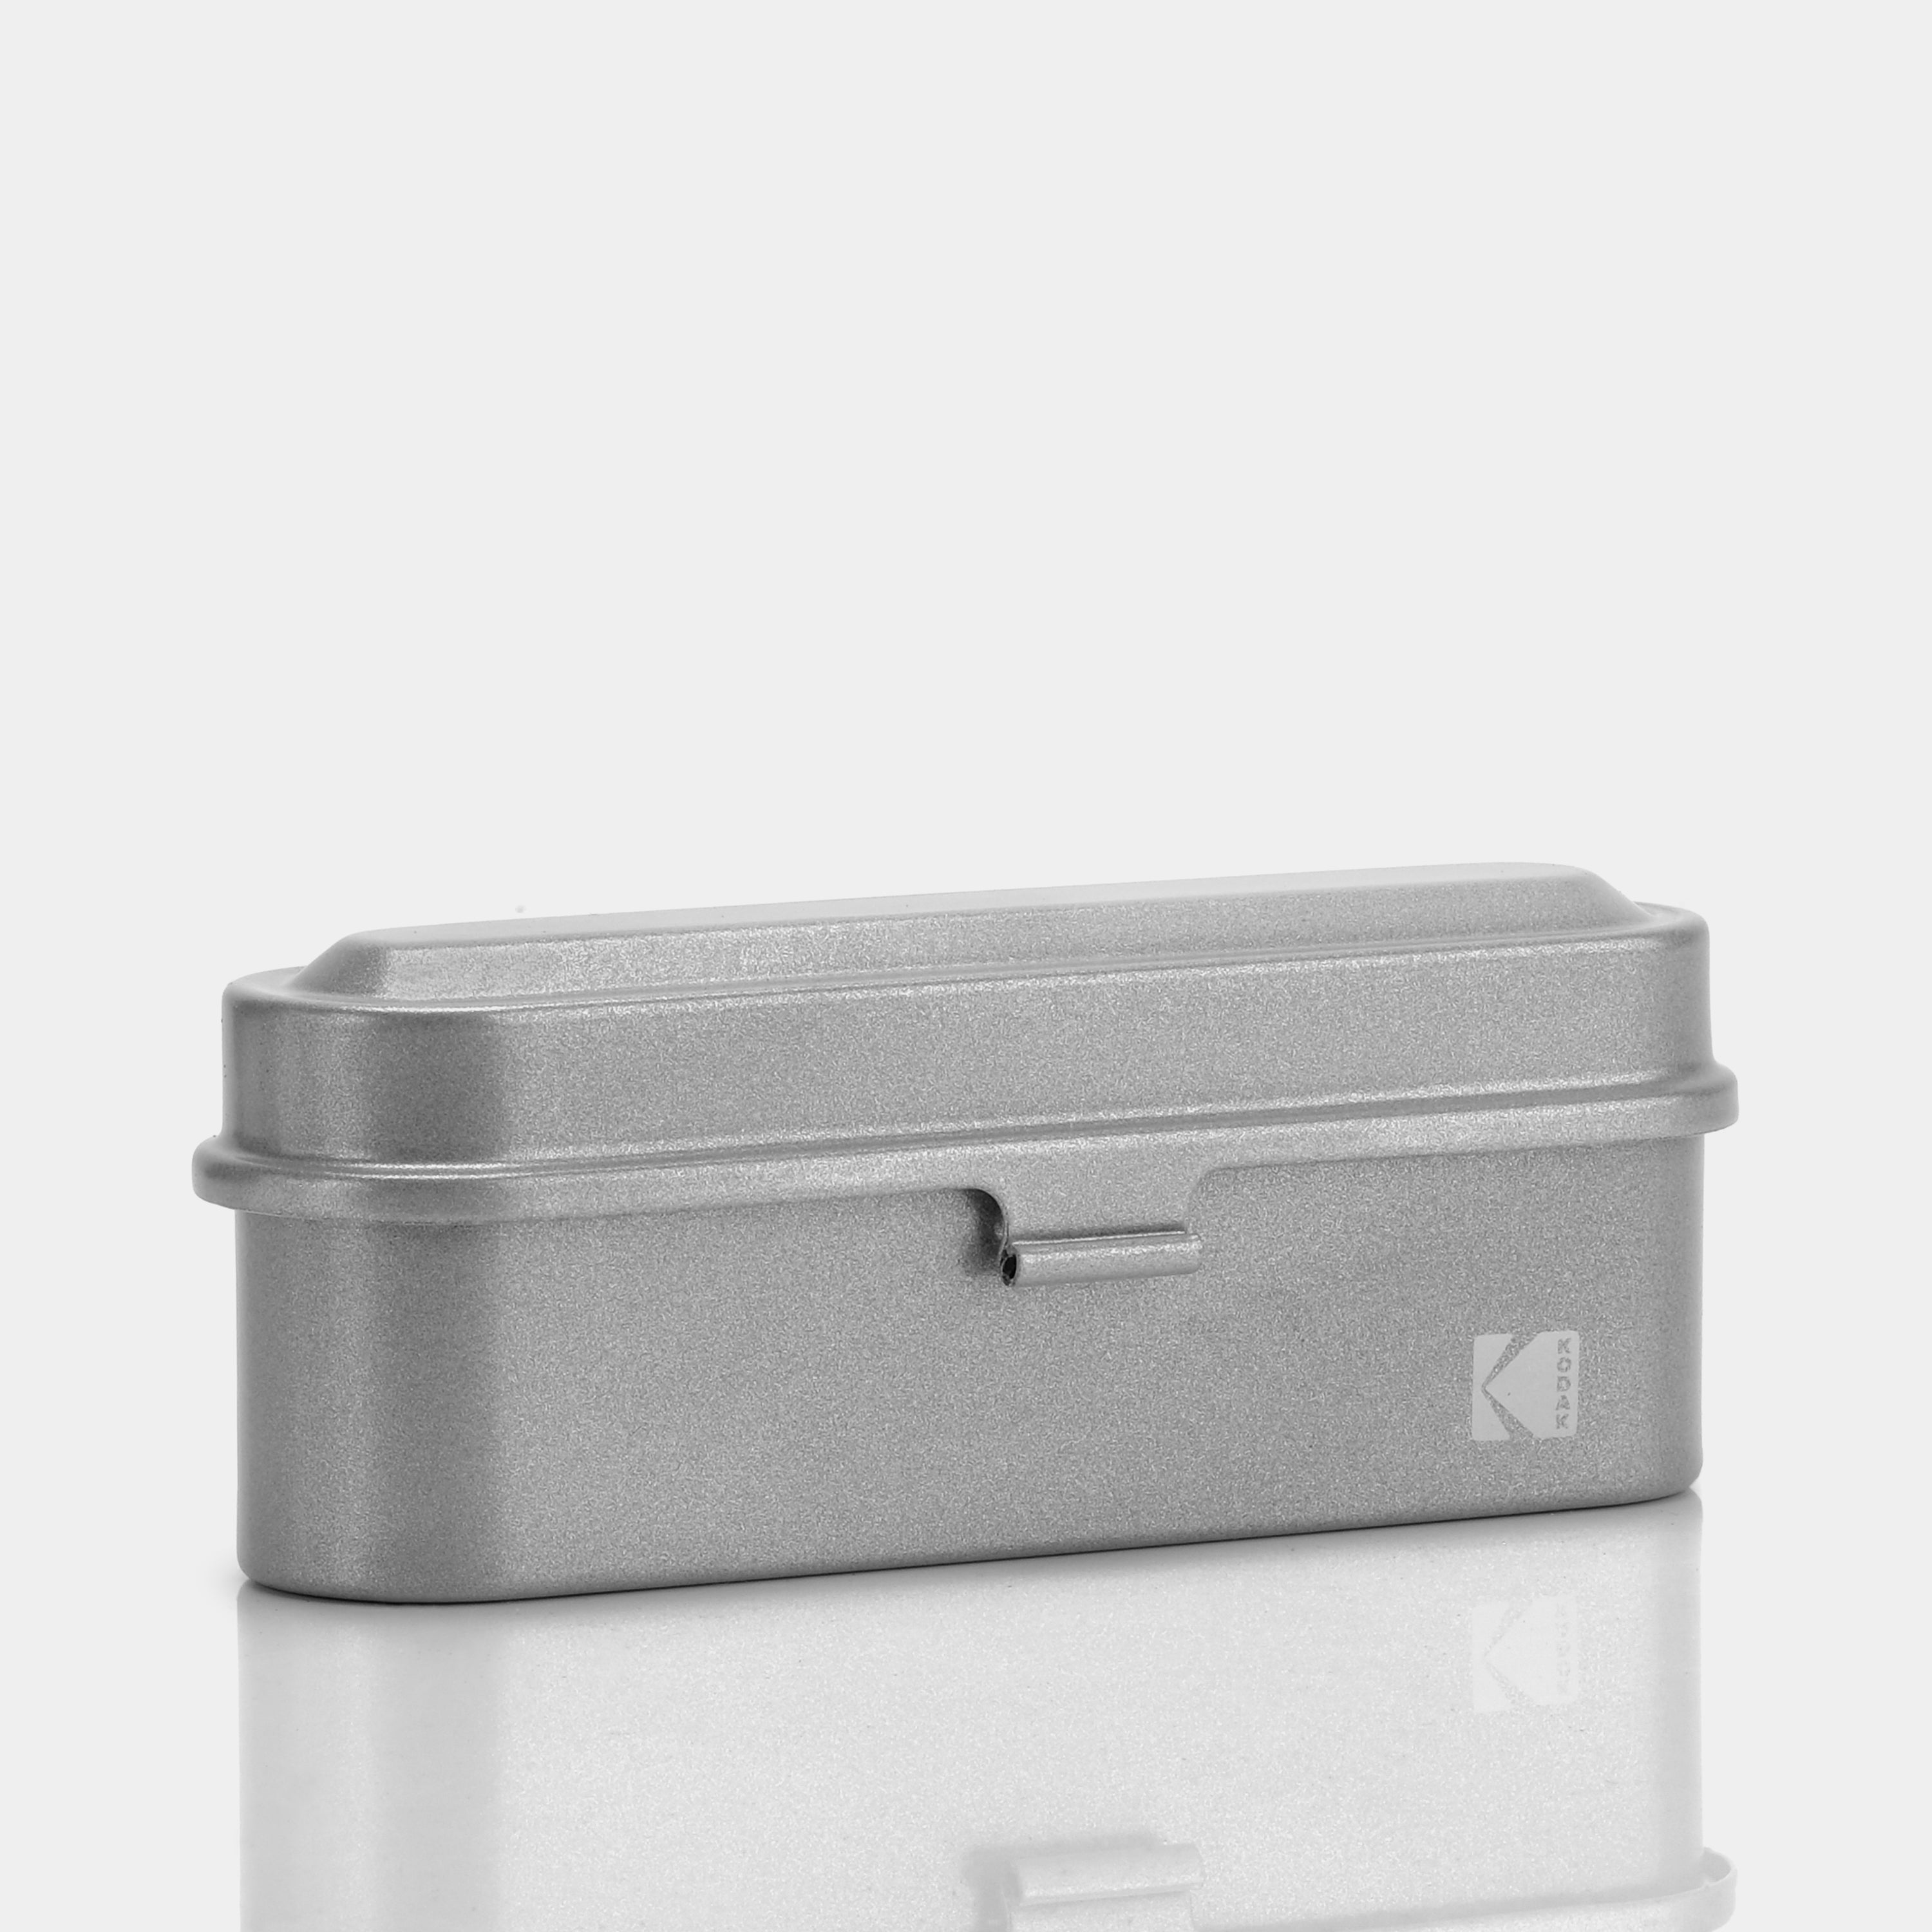 Kodak Matte Silver Classic 35mm Film Storage Case